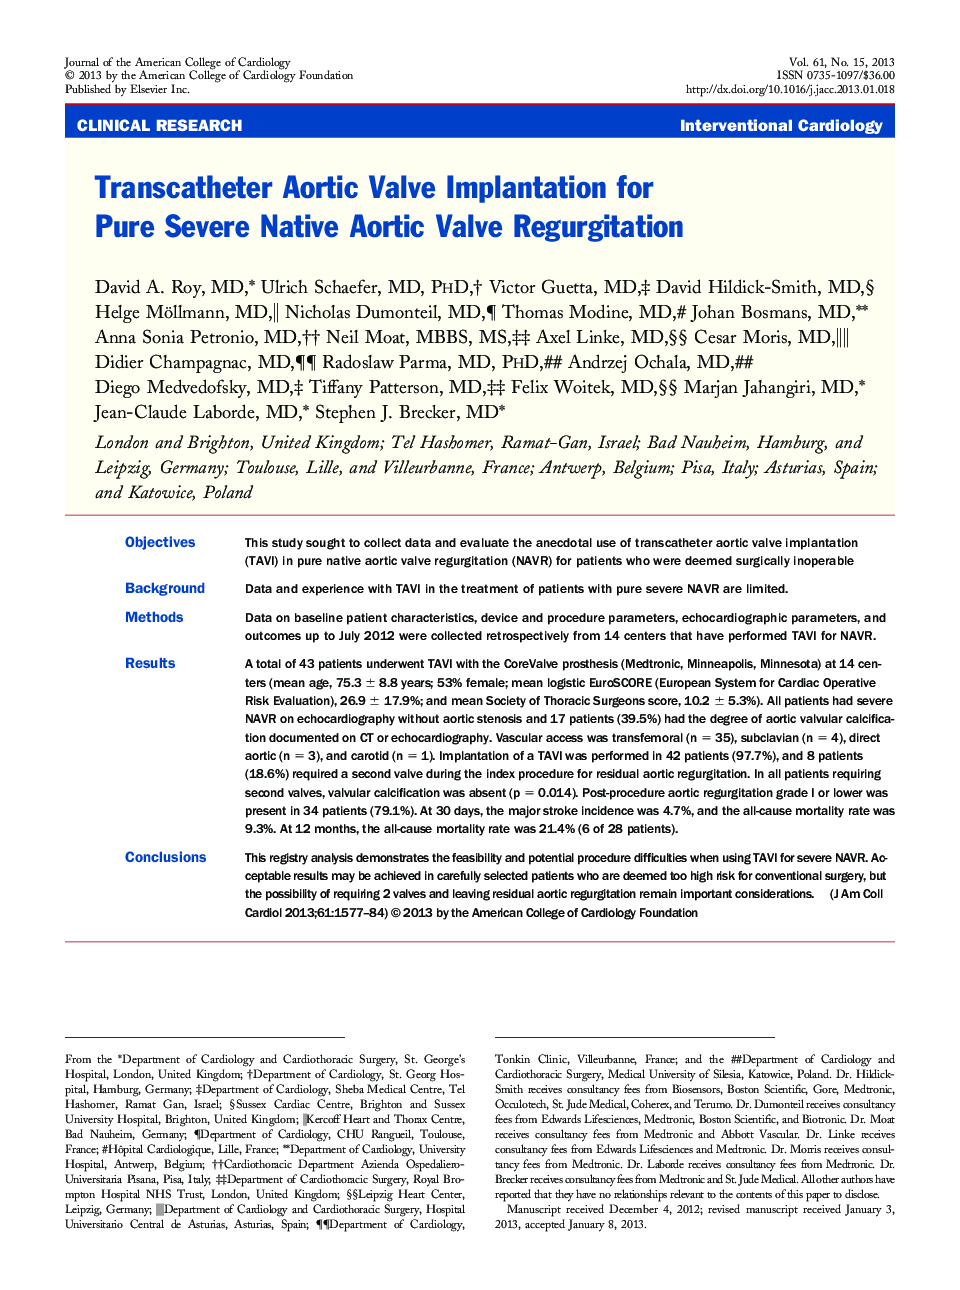 Transcatheter Aortic Valve Implantation for Pure Severe Native Aortic Valve Regurgitation 